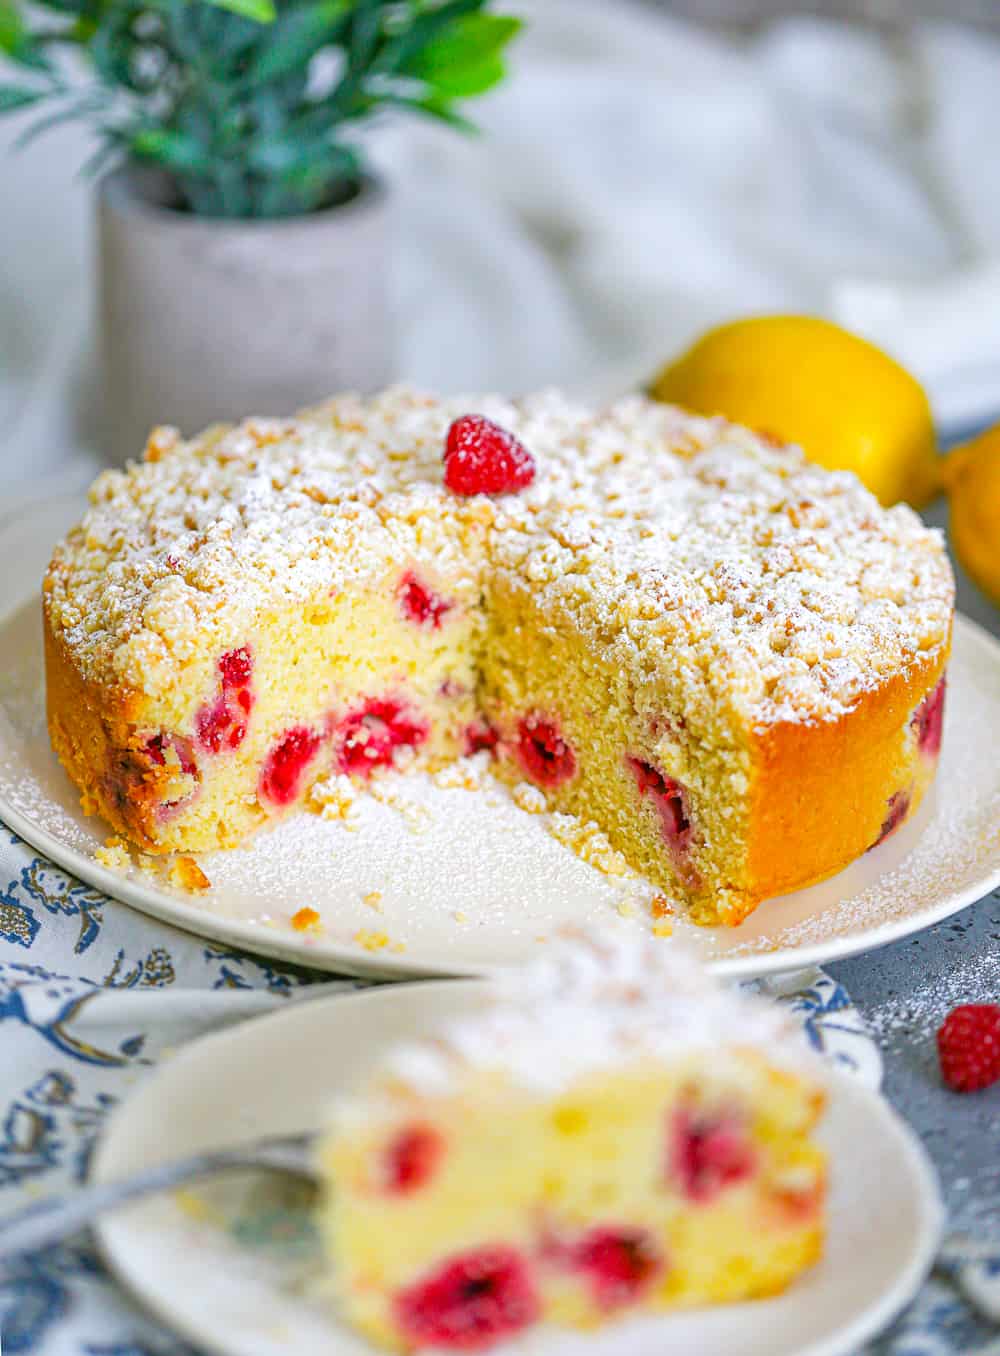 Lemon Raspberry Crumb Cake